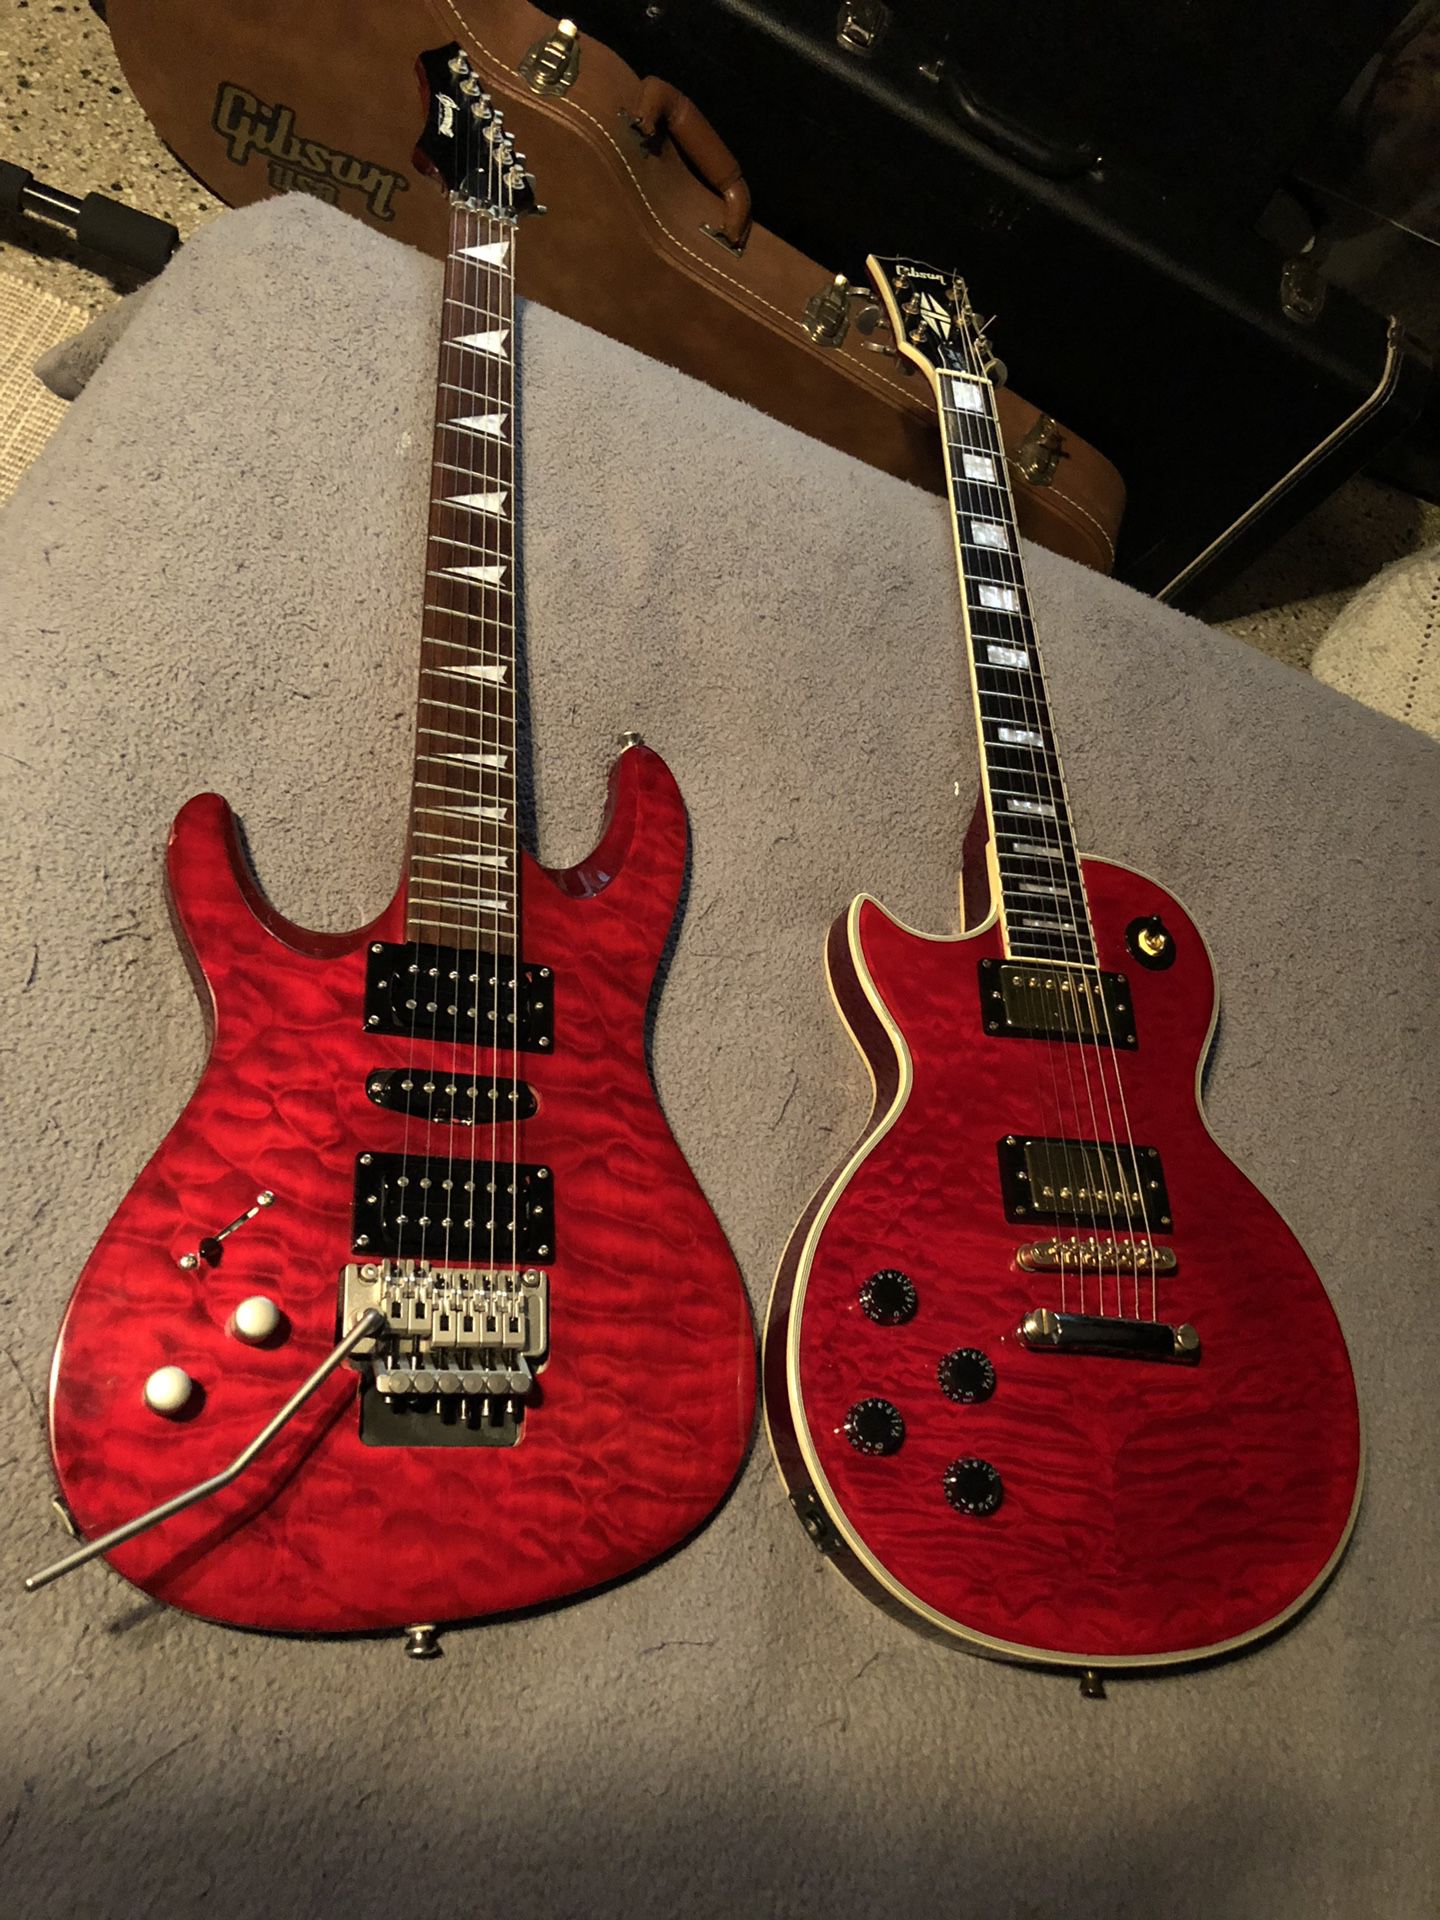 Lefty guitars.. perfect...